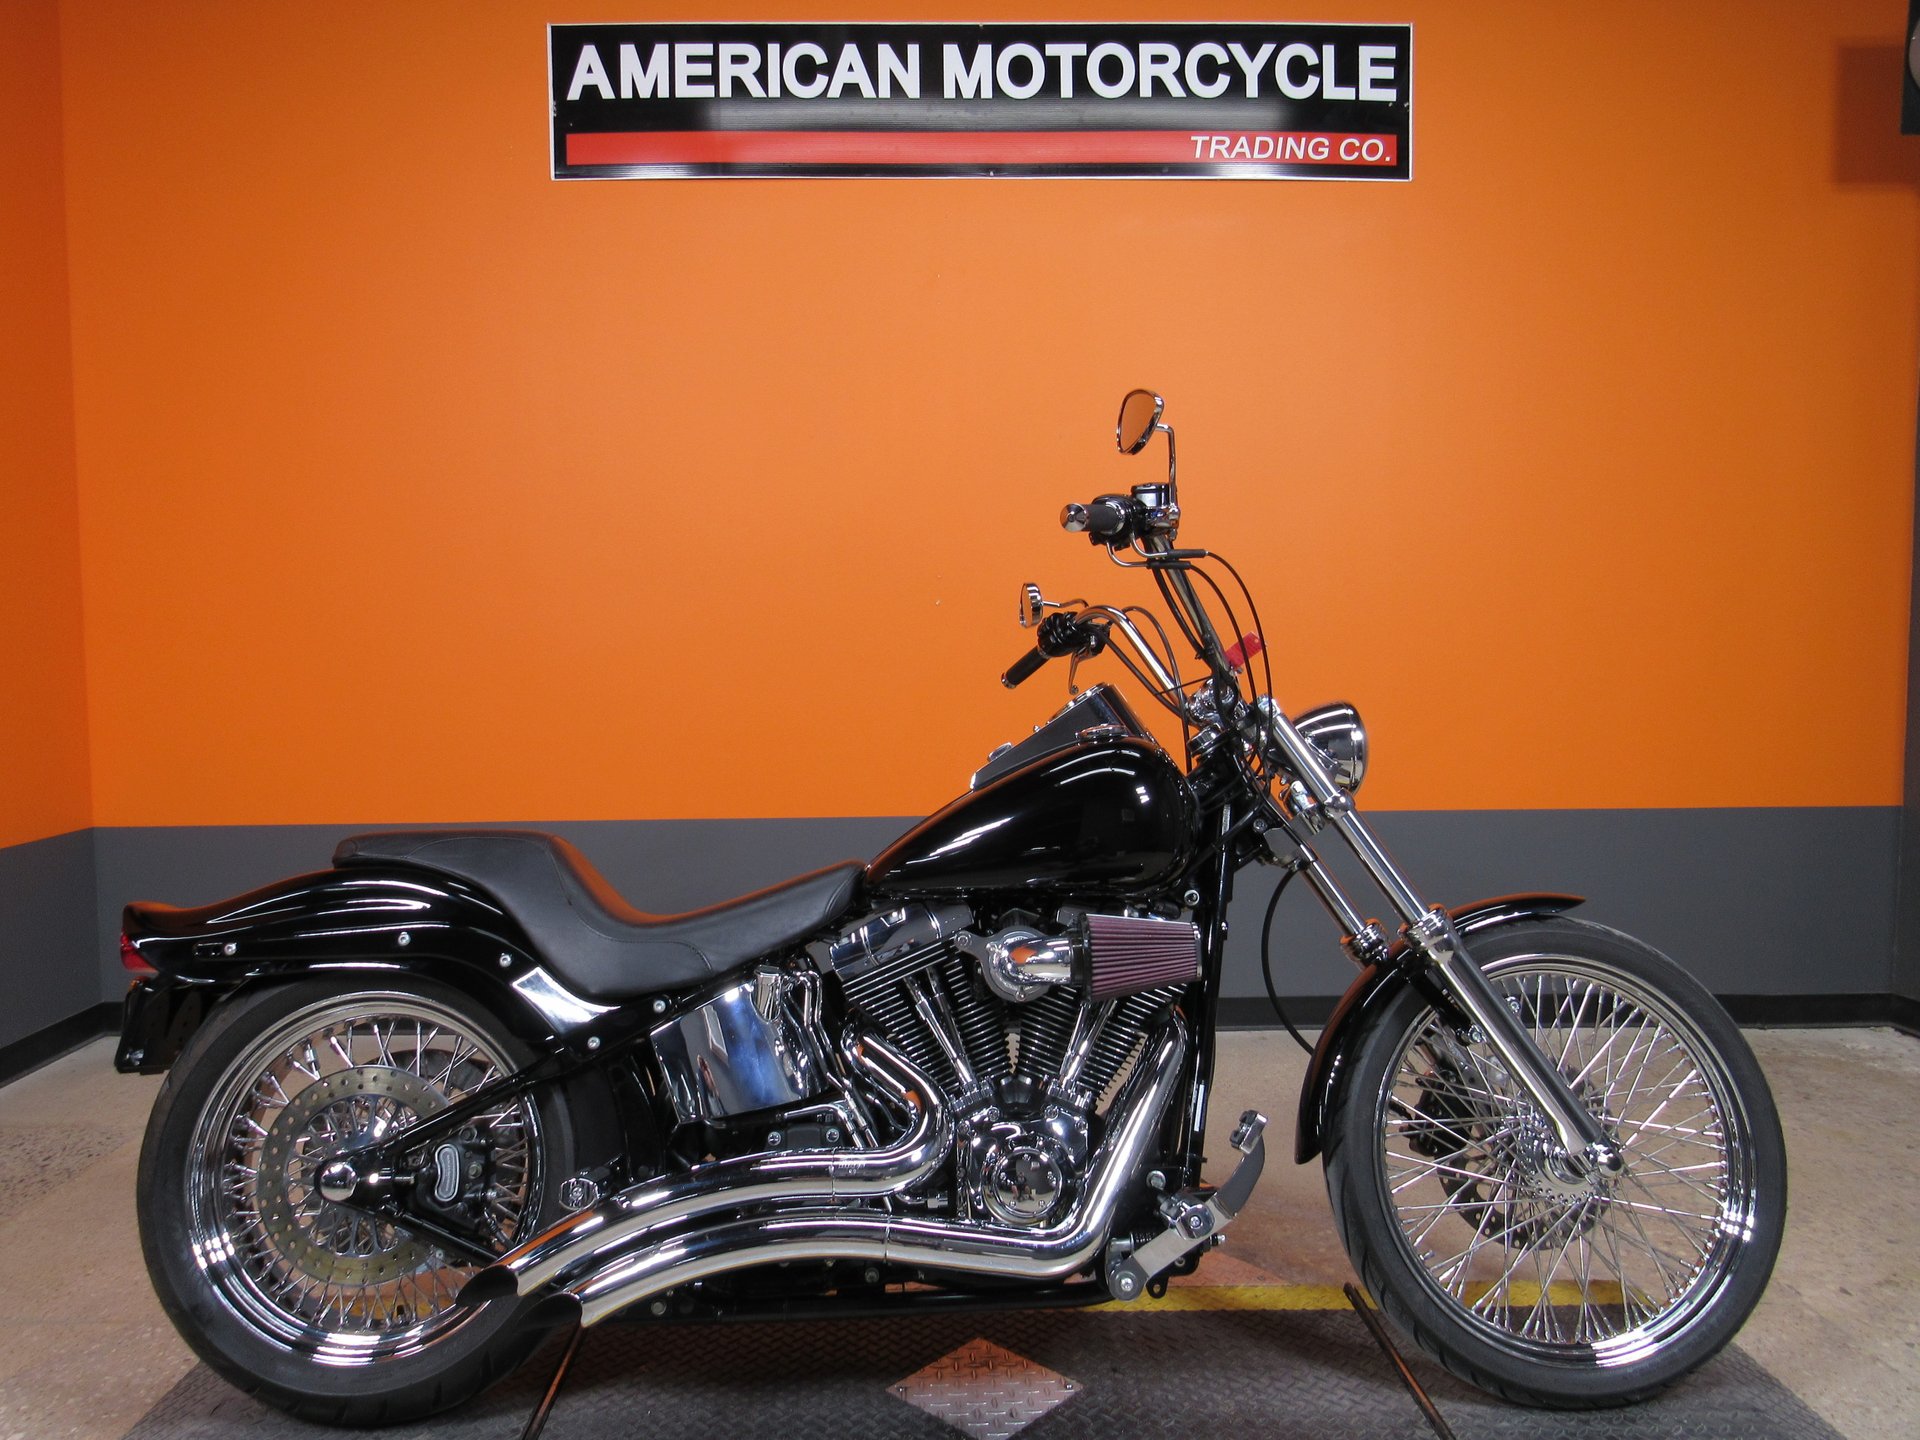 2007 Harley-Davidson Softail Custom | American Motorcycle Trading ...